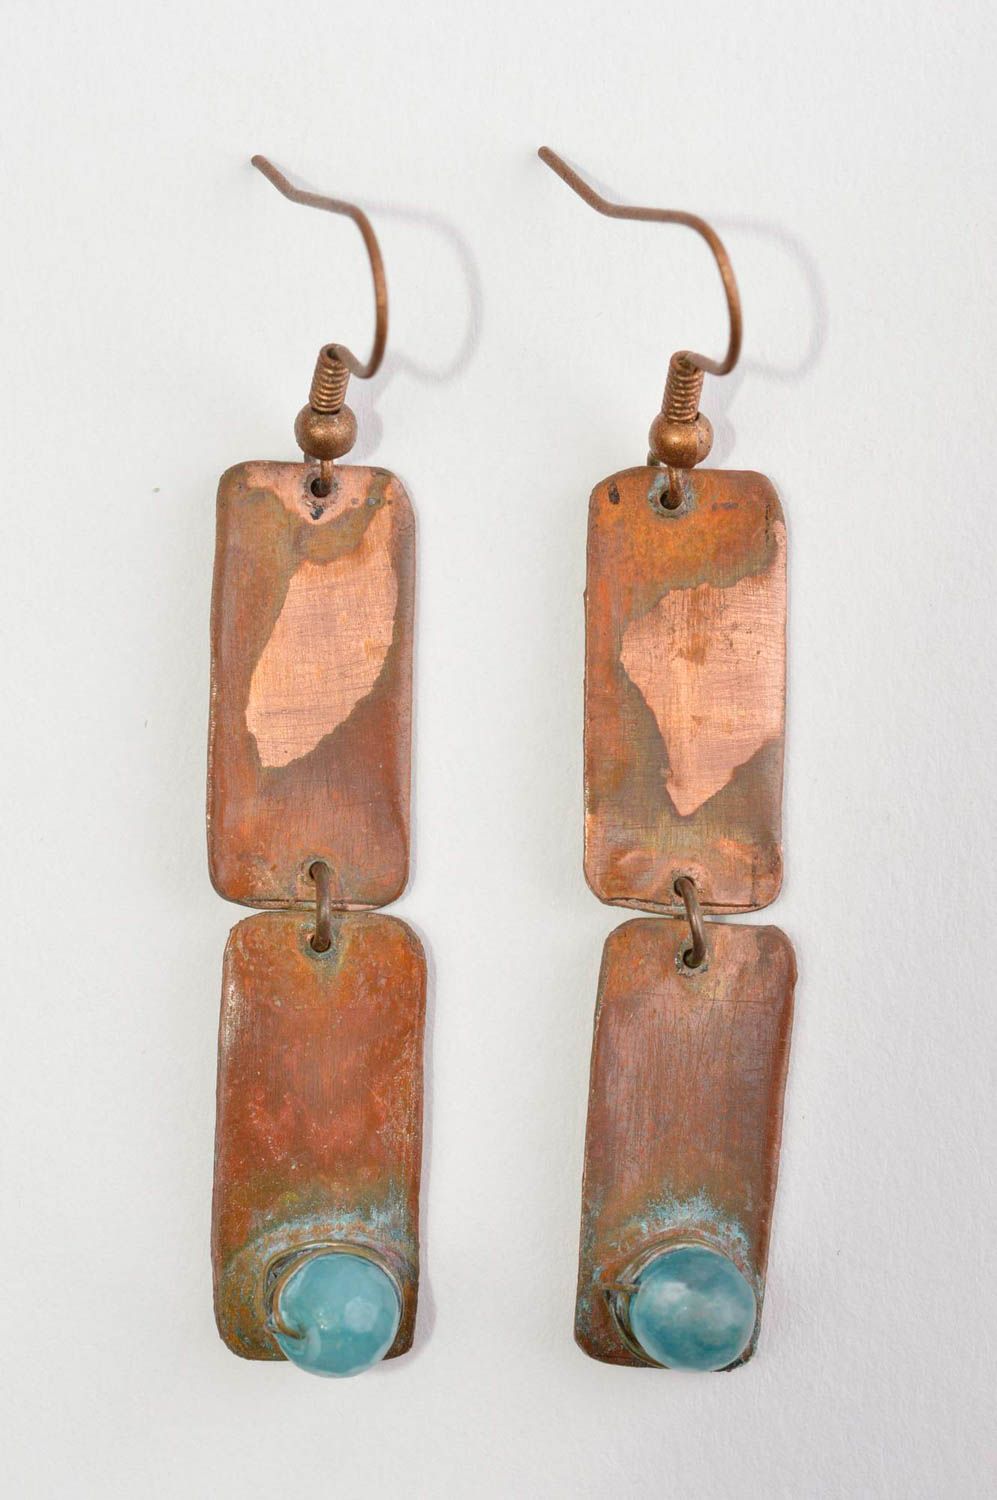 Handmade jewelry unusual gift designer accessories copper earrings gift ideas photo 2